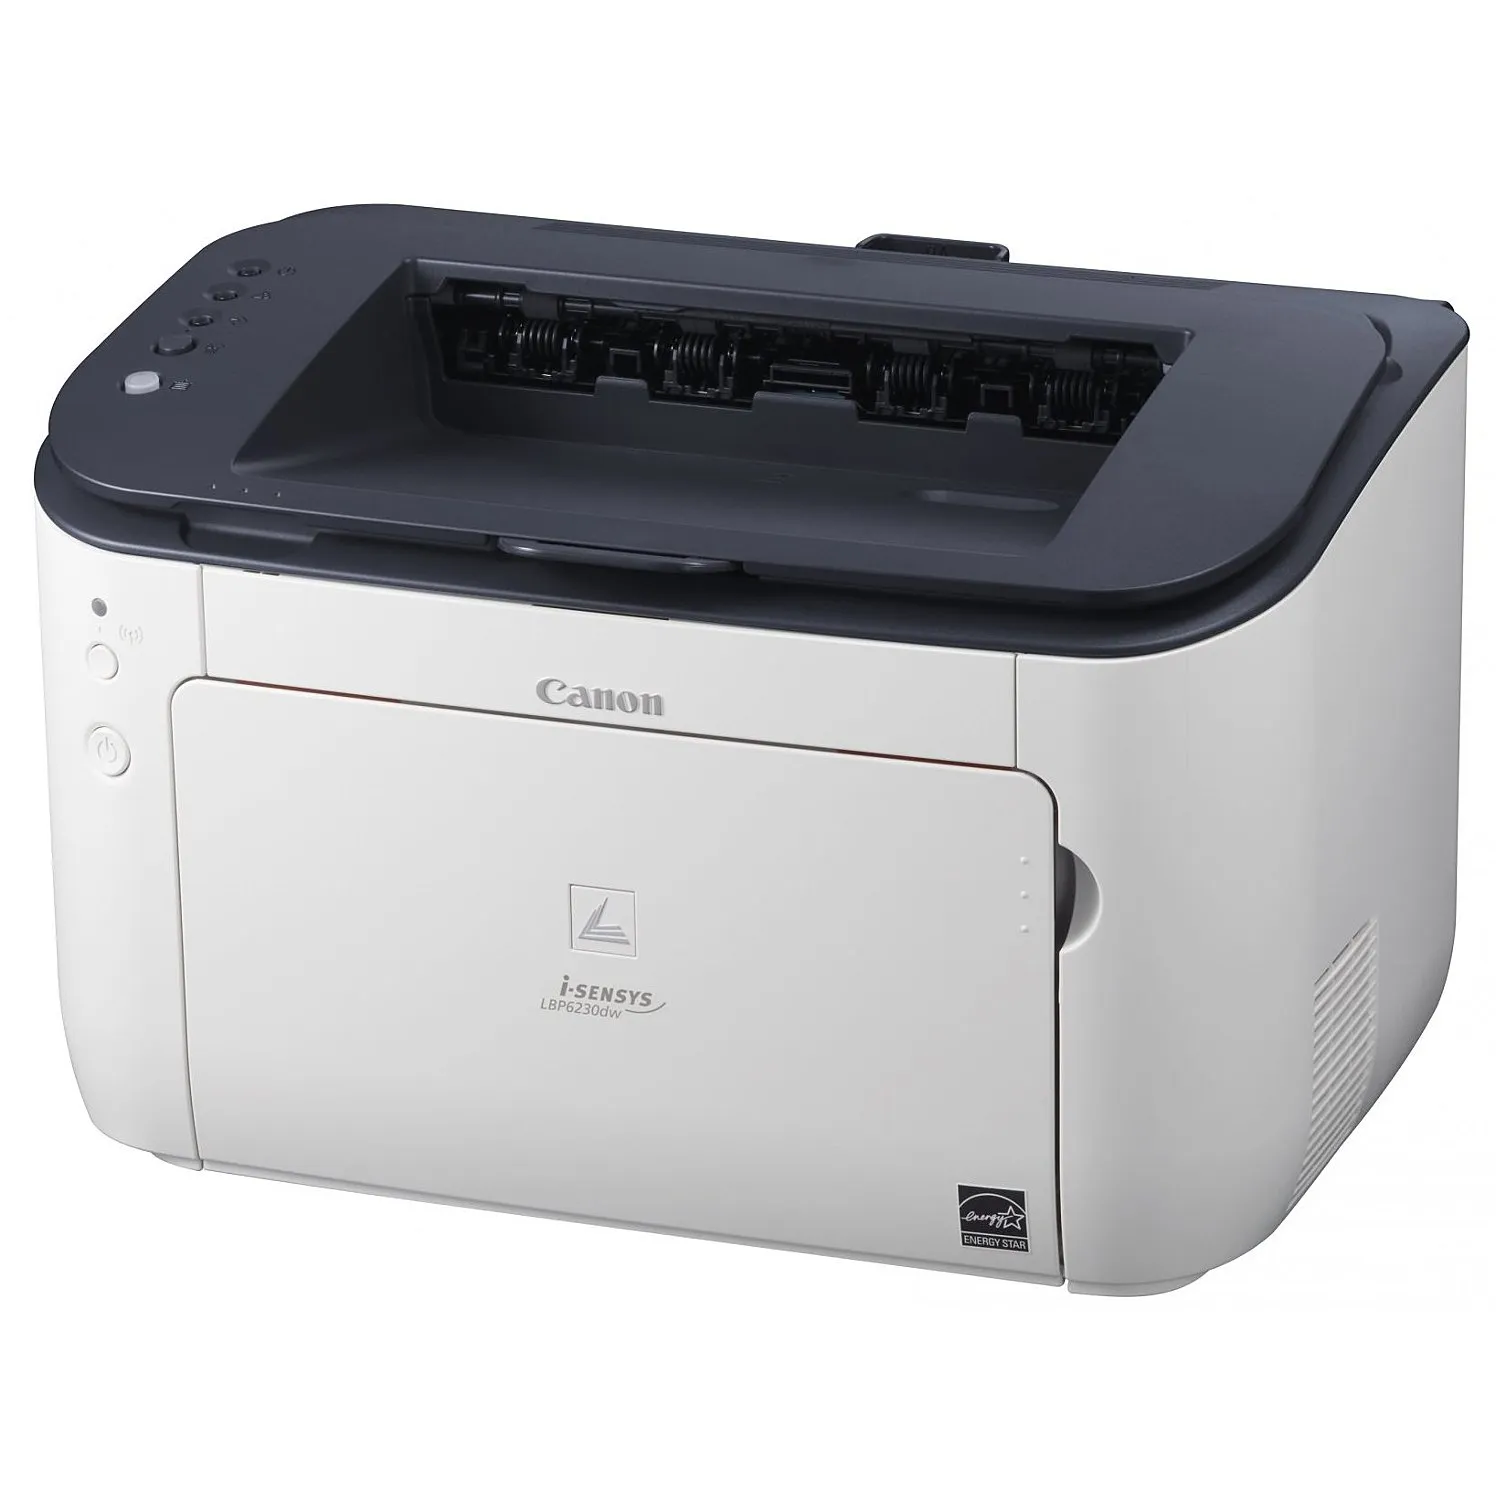 Принтер Canon i-SENSYS LBP6230dw (A4, 64Mb, 25 стр / мин, 600dpi, USB2.0, двусторонняя печать, WiFi, сетевой)#5